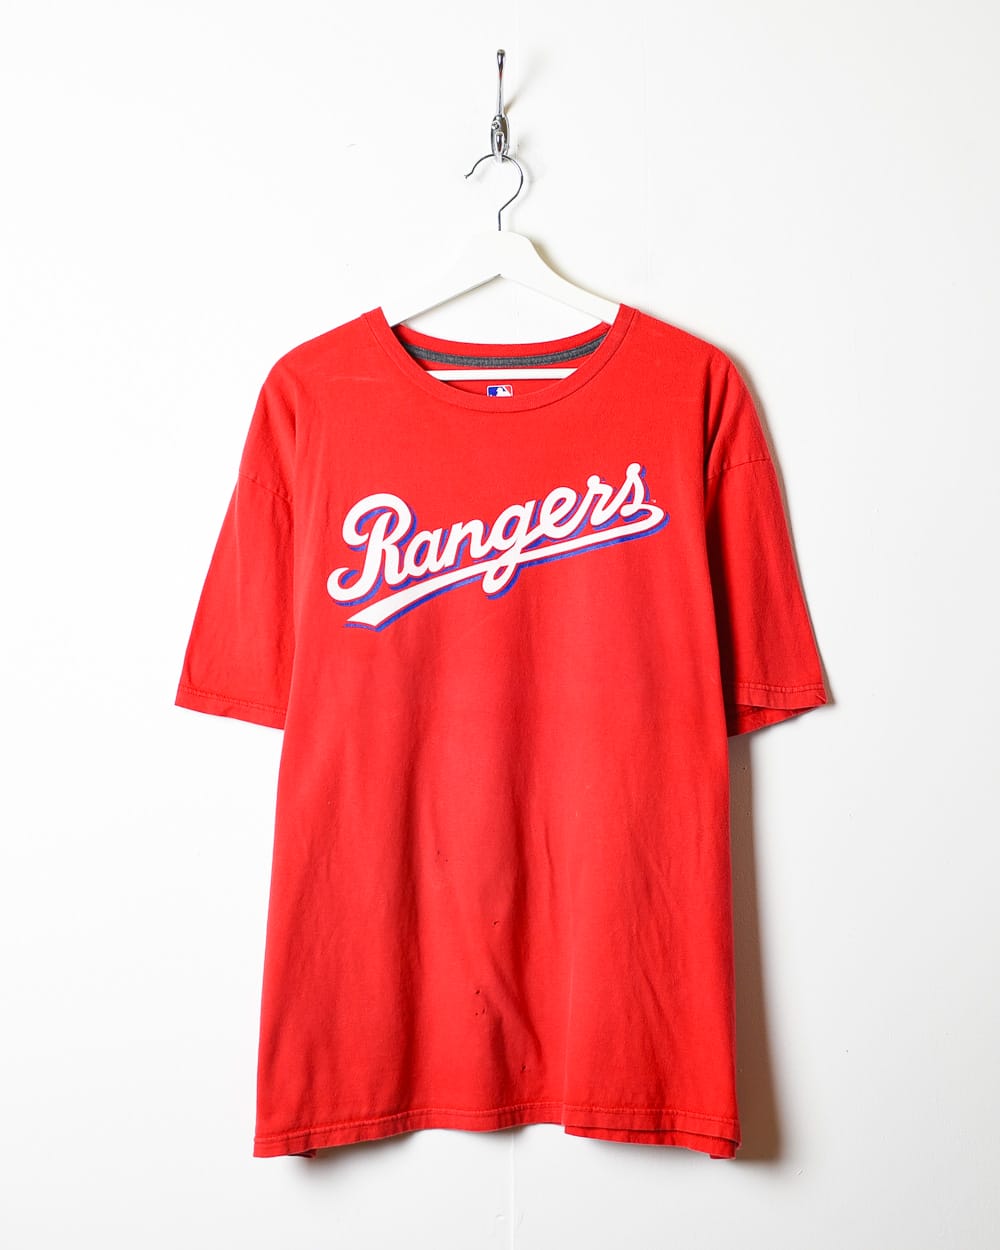 Official Texas Rangers Tommy Bahama Polos, Rangers Golf Shirts, Dress Shirts